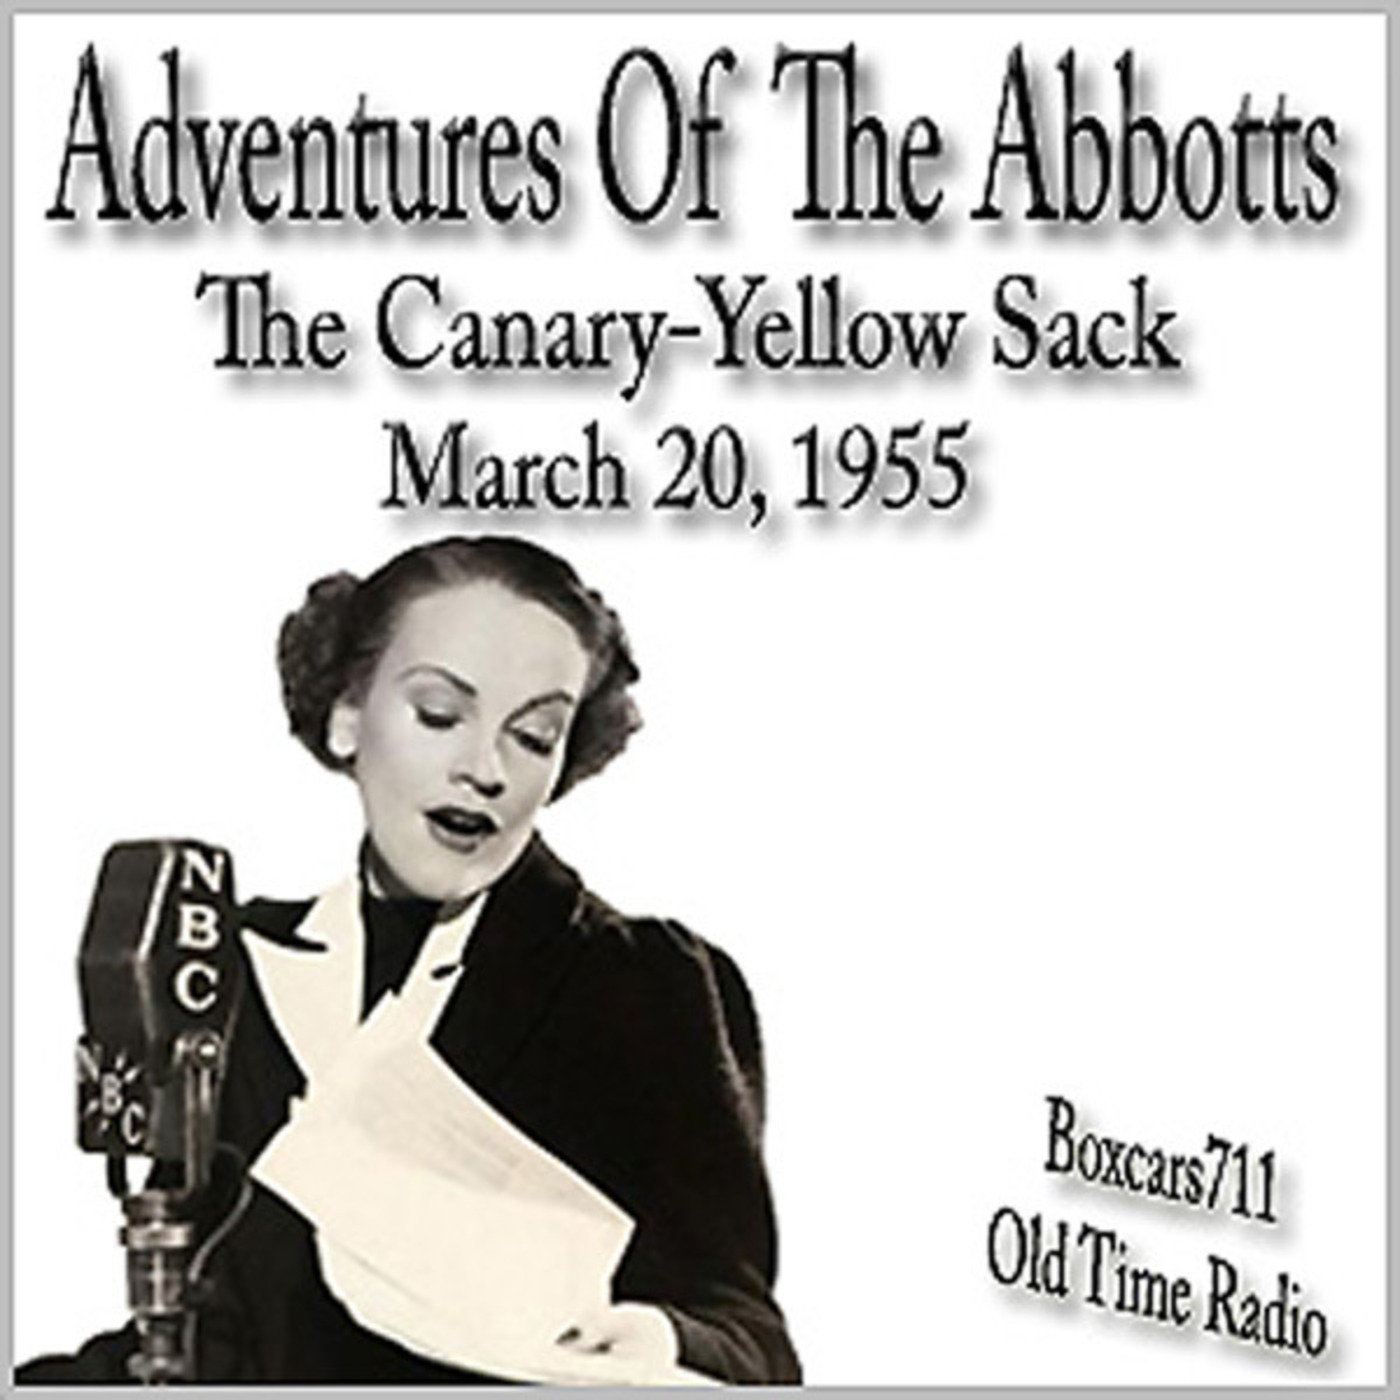 Episode 9691: Adventures Of The Abbotts - 